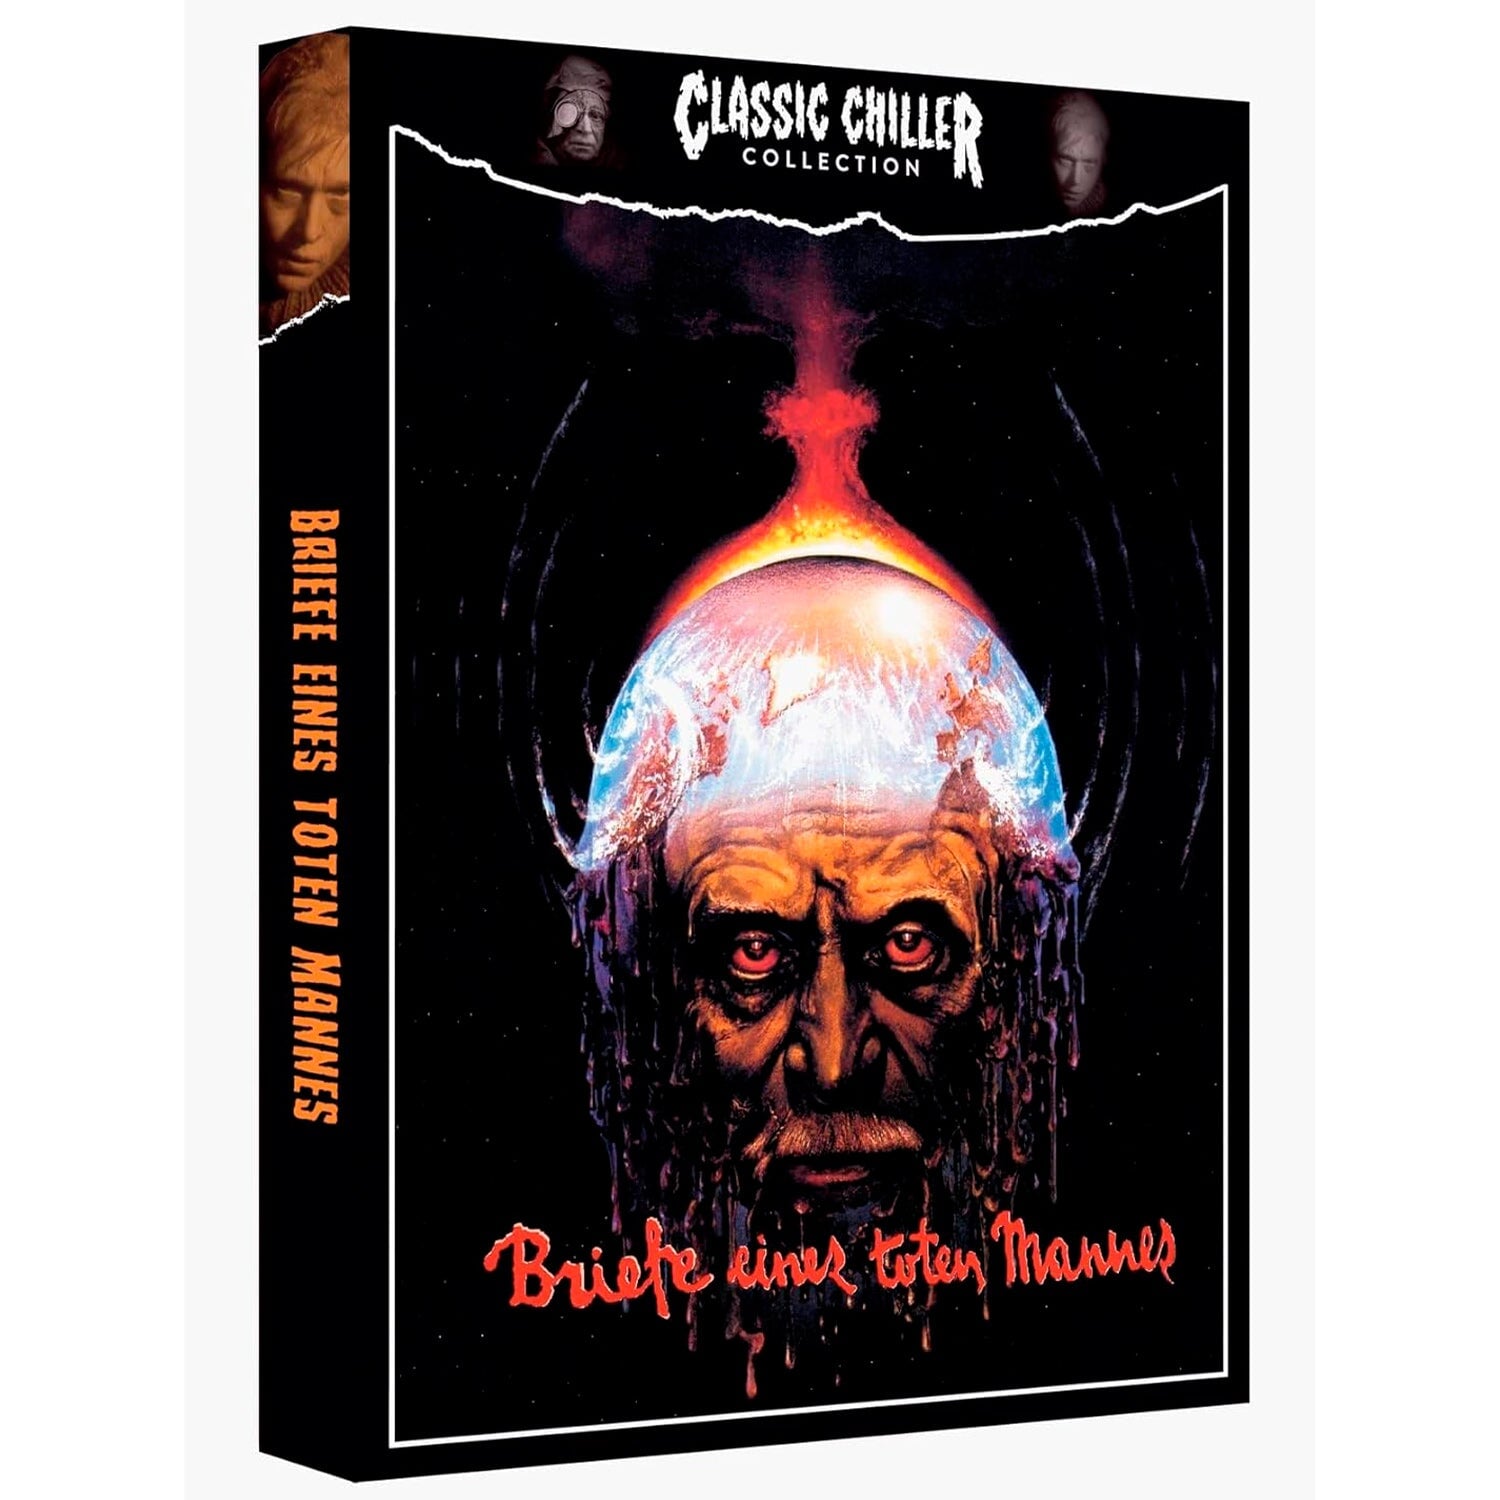 Письма мертвого человека (1986) (Blu-ray + CD) Classic Chiller Collection #22